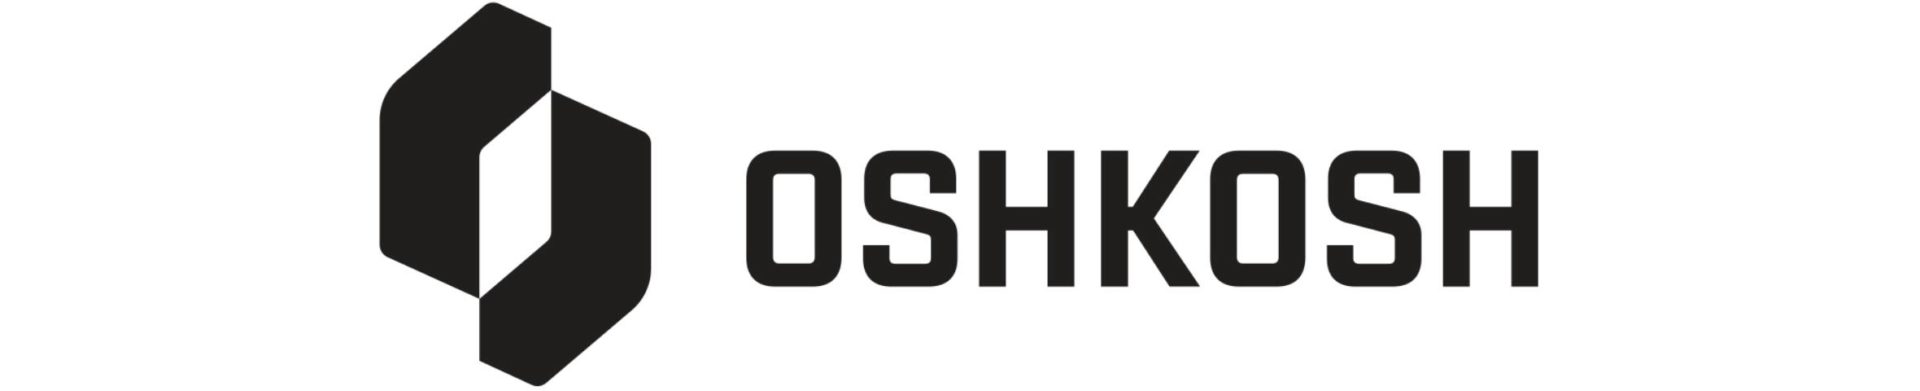 Oshkosh Corporation logo in black on a white background